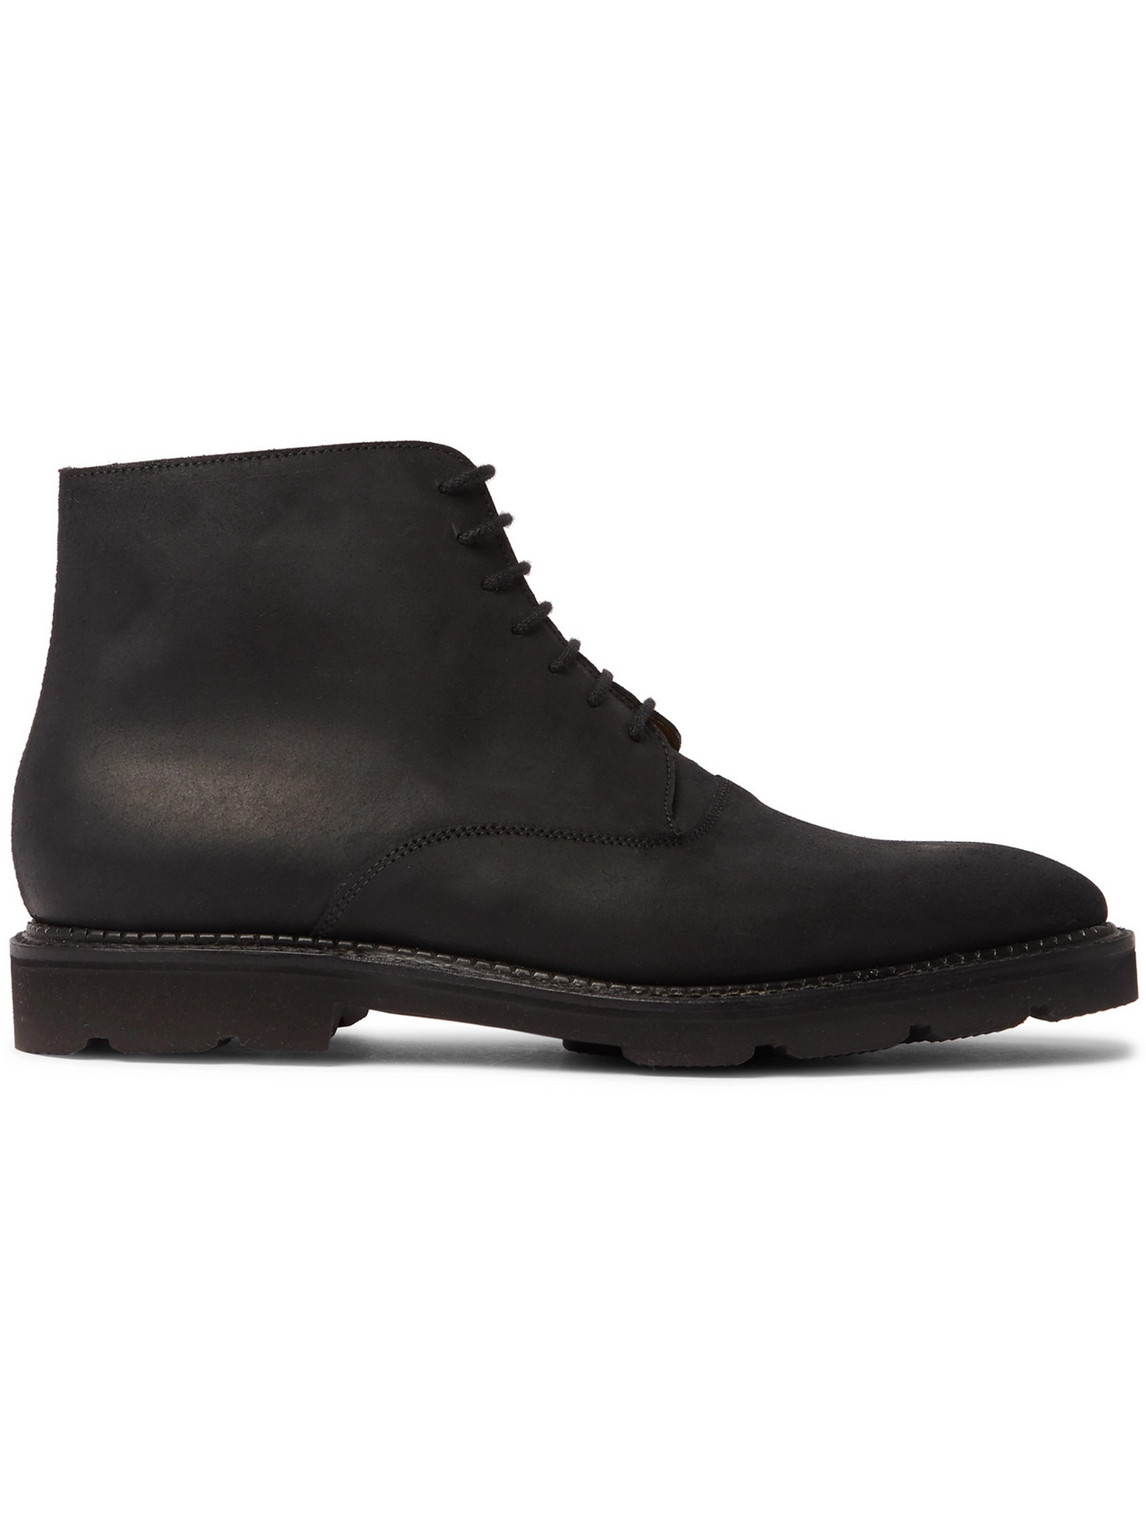 John Lobb - Forge Waxed-Leather Oxford Boots - Men - Black - Uk 10 ...